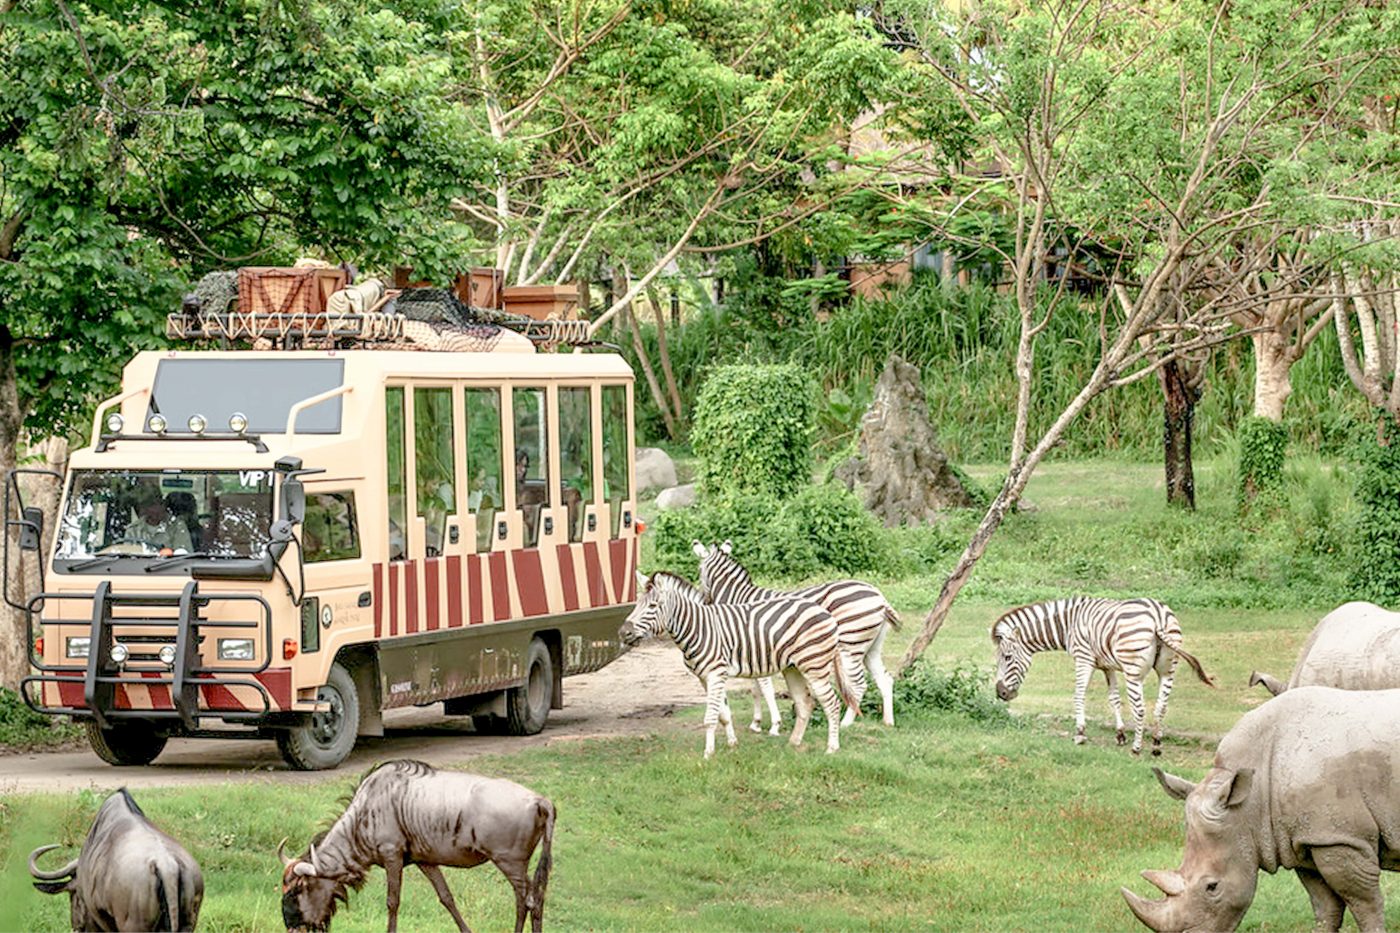 Bali Safari And Marine Park - Bali Tour Packages And Honeymoon